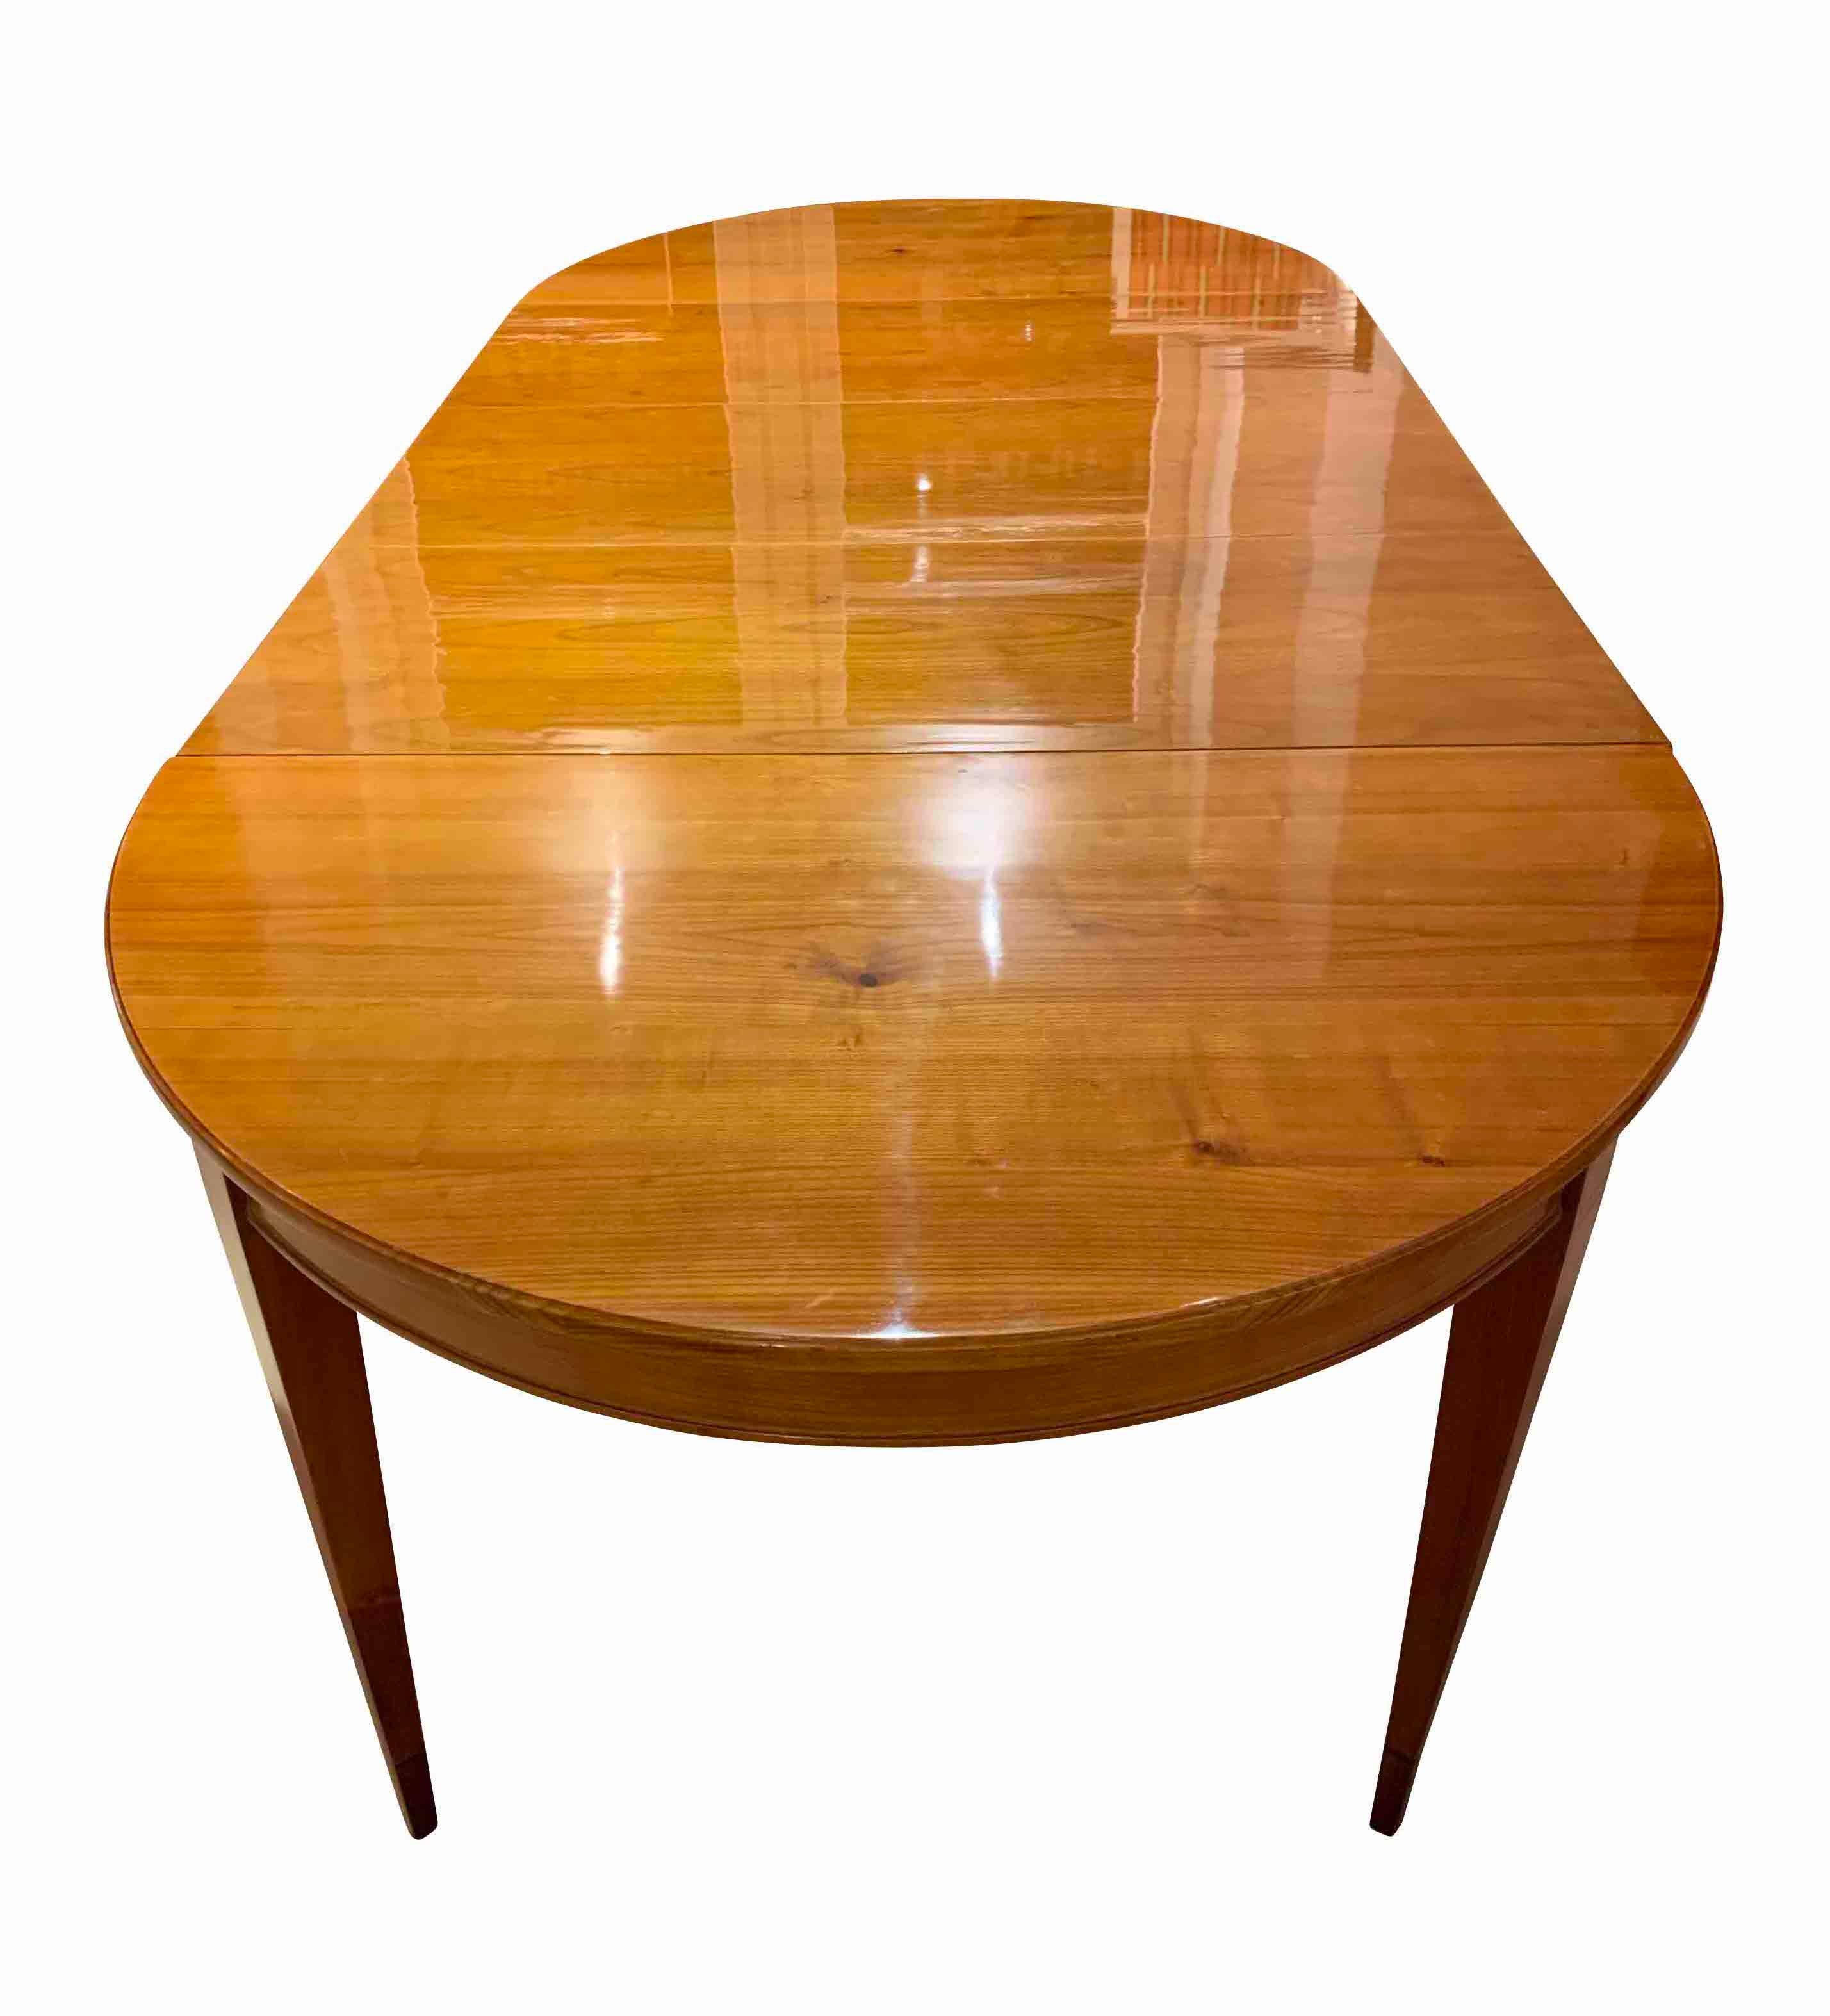 Polished Biedermeier Expandable Table, Cherrywood, Southwest Germany, 19th Century